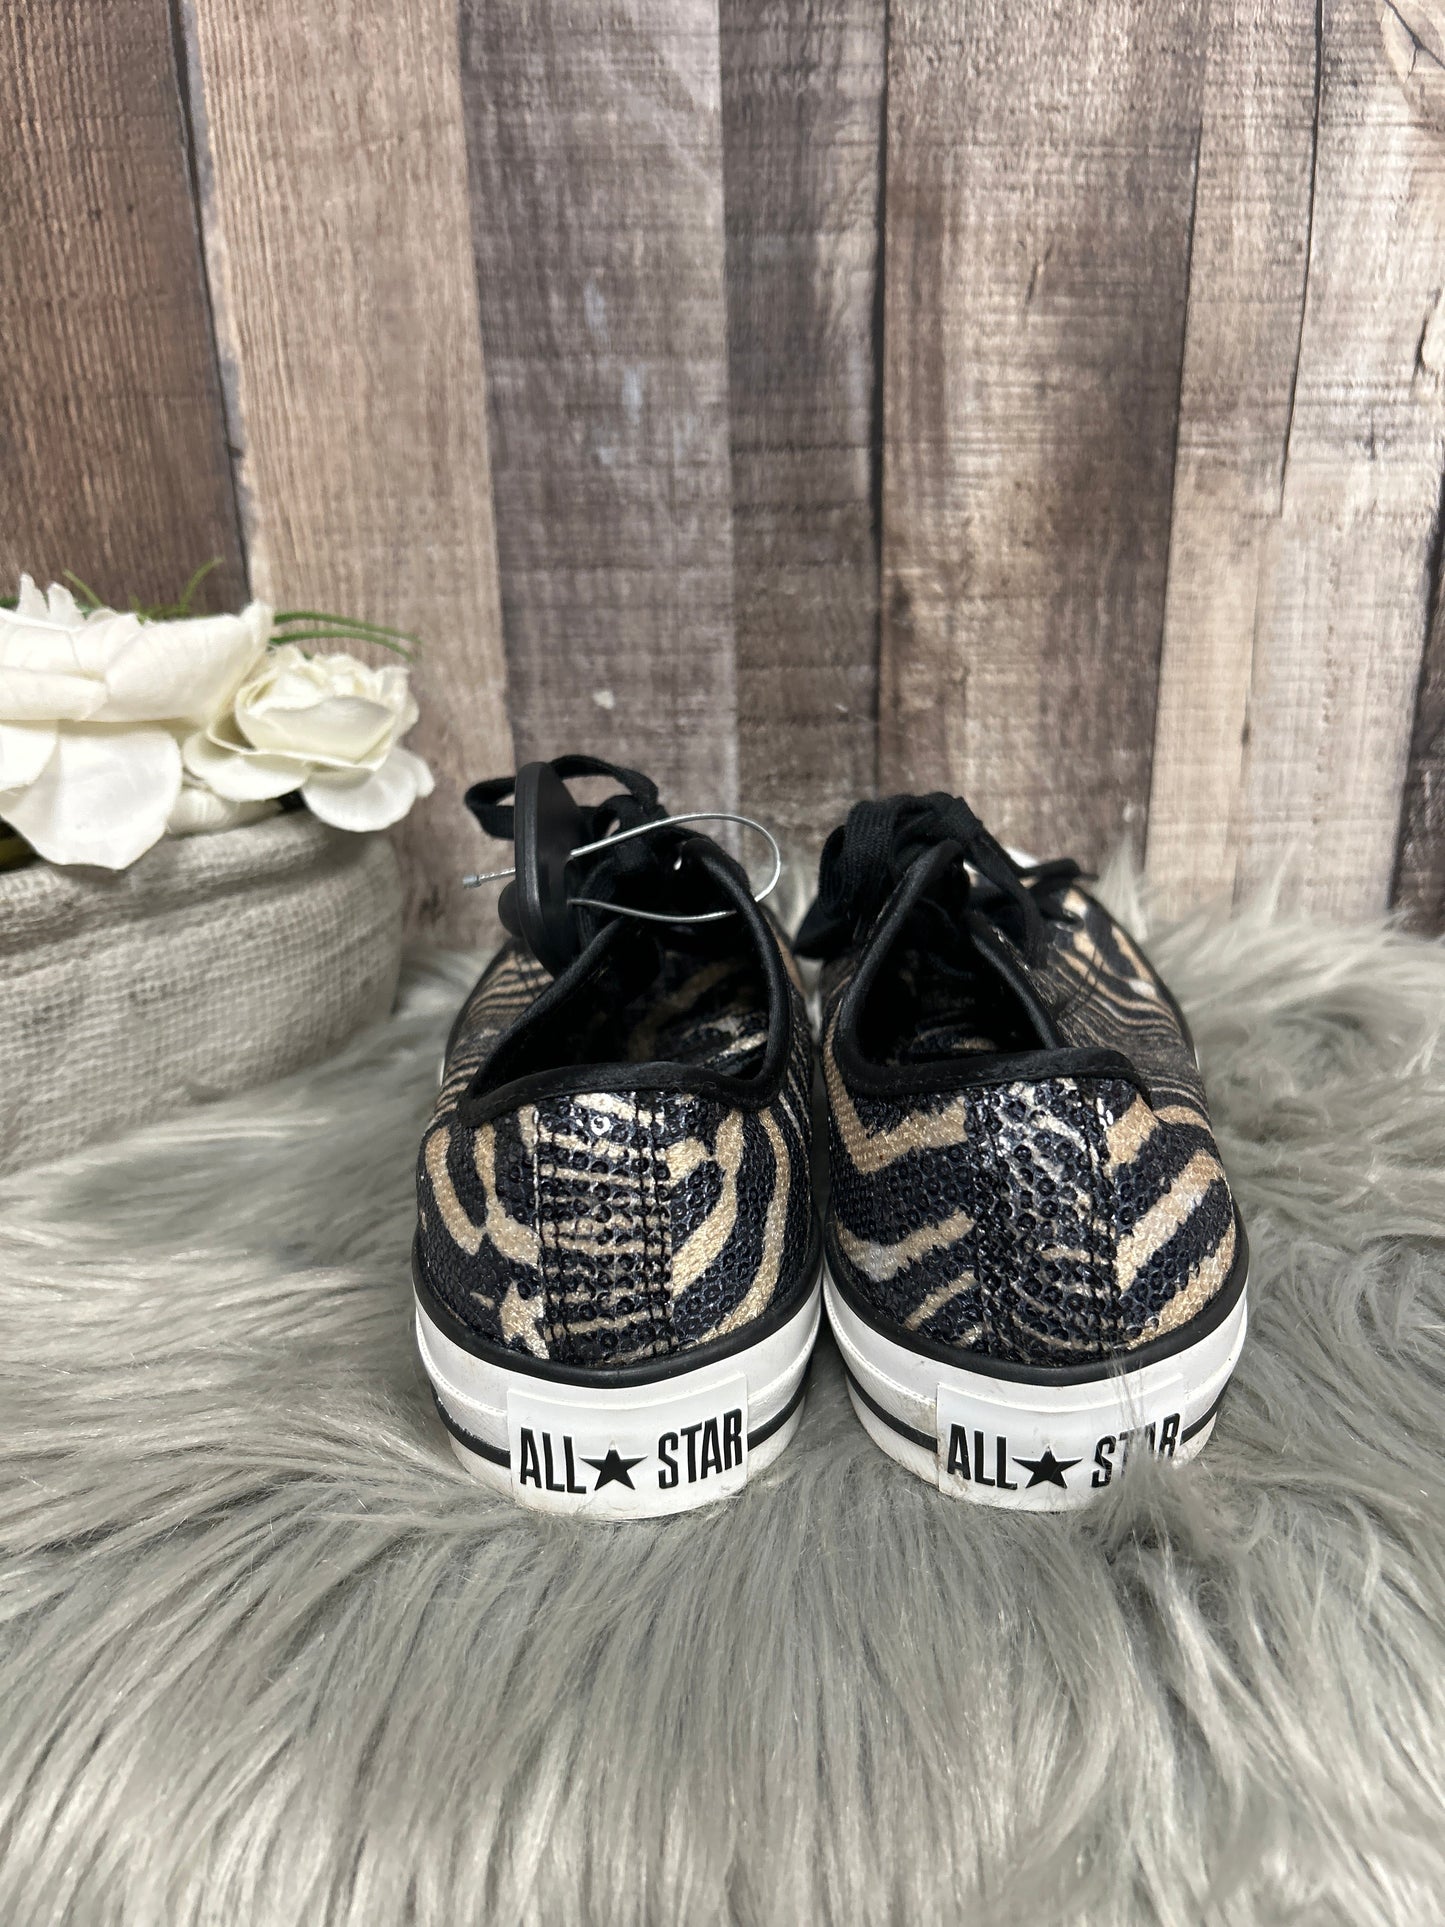 Zebra Print Shoes Sneakers Converse, Size 8